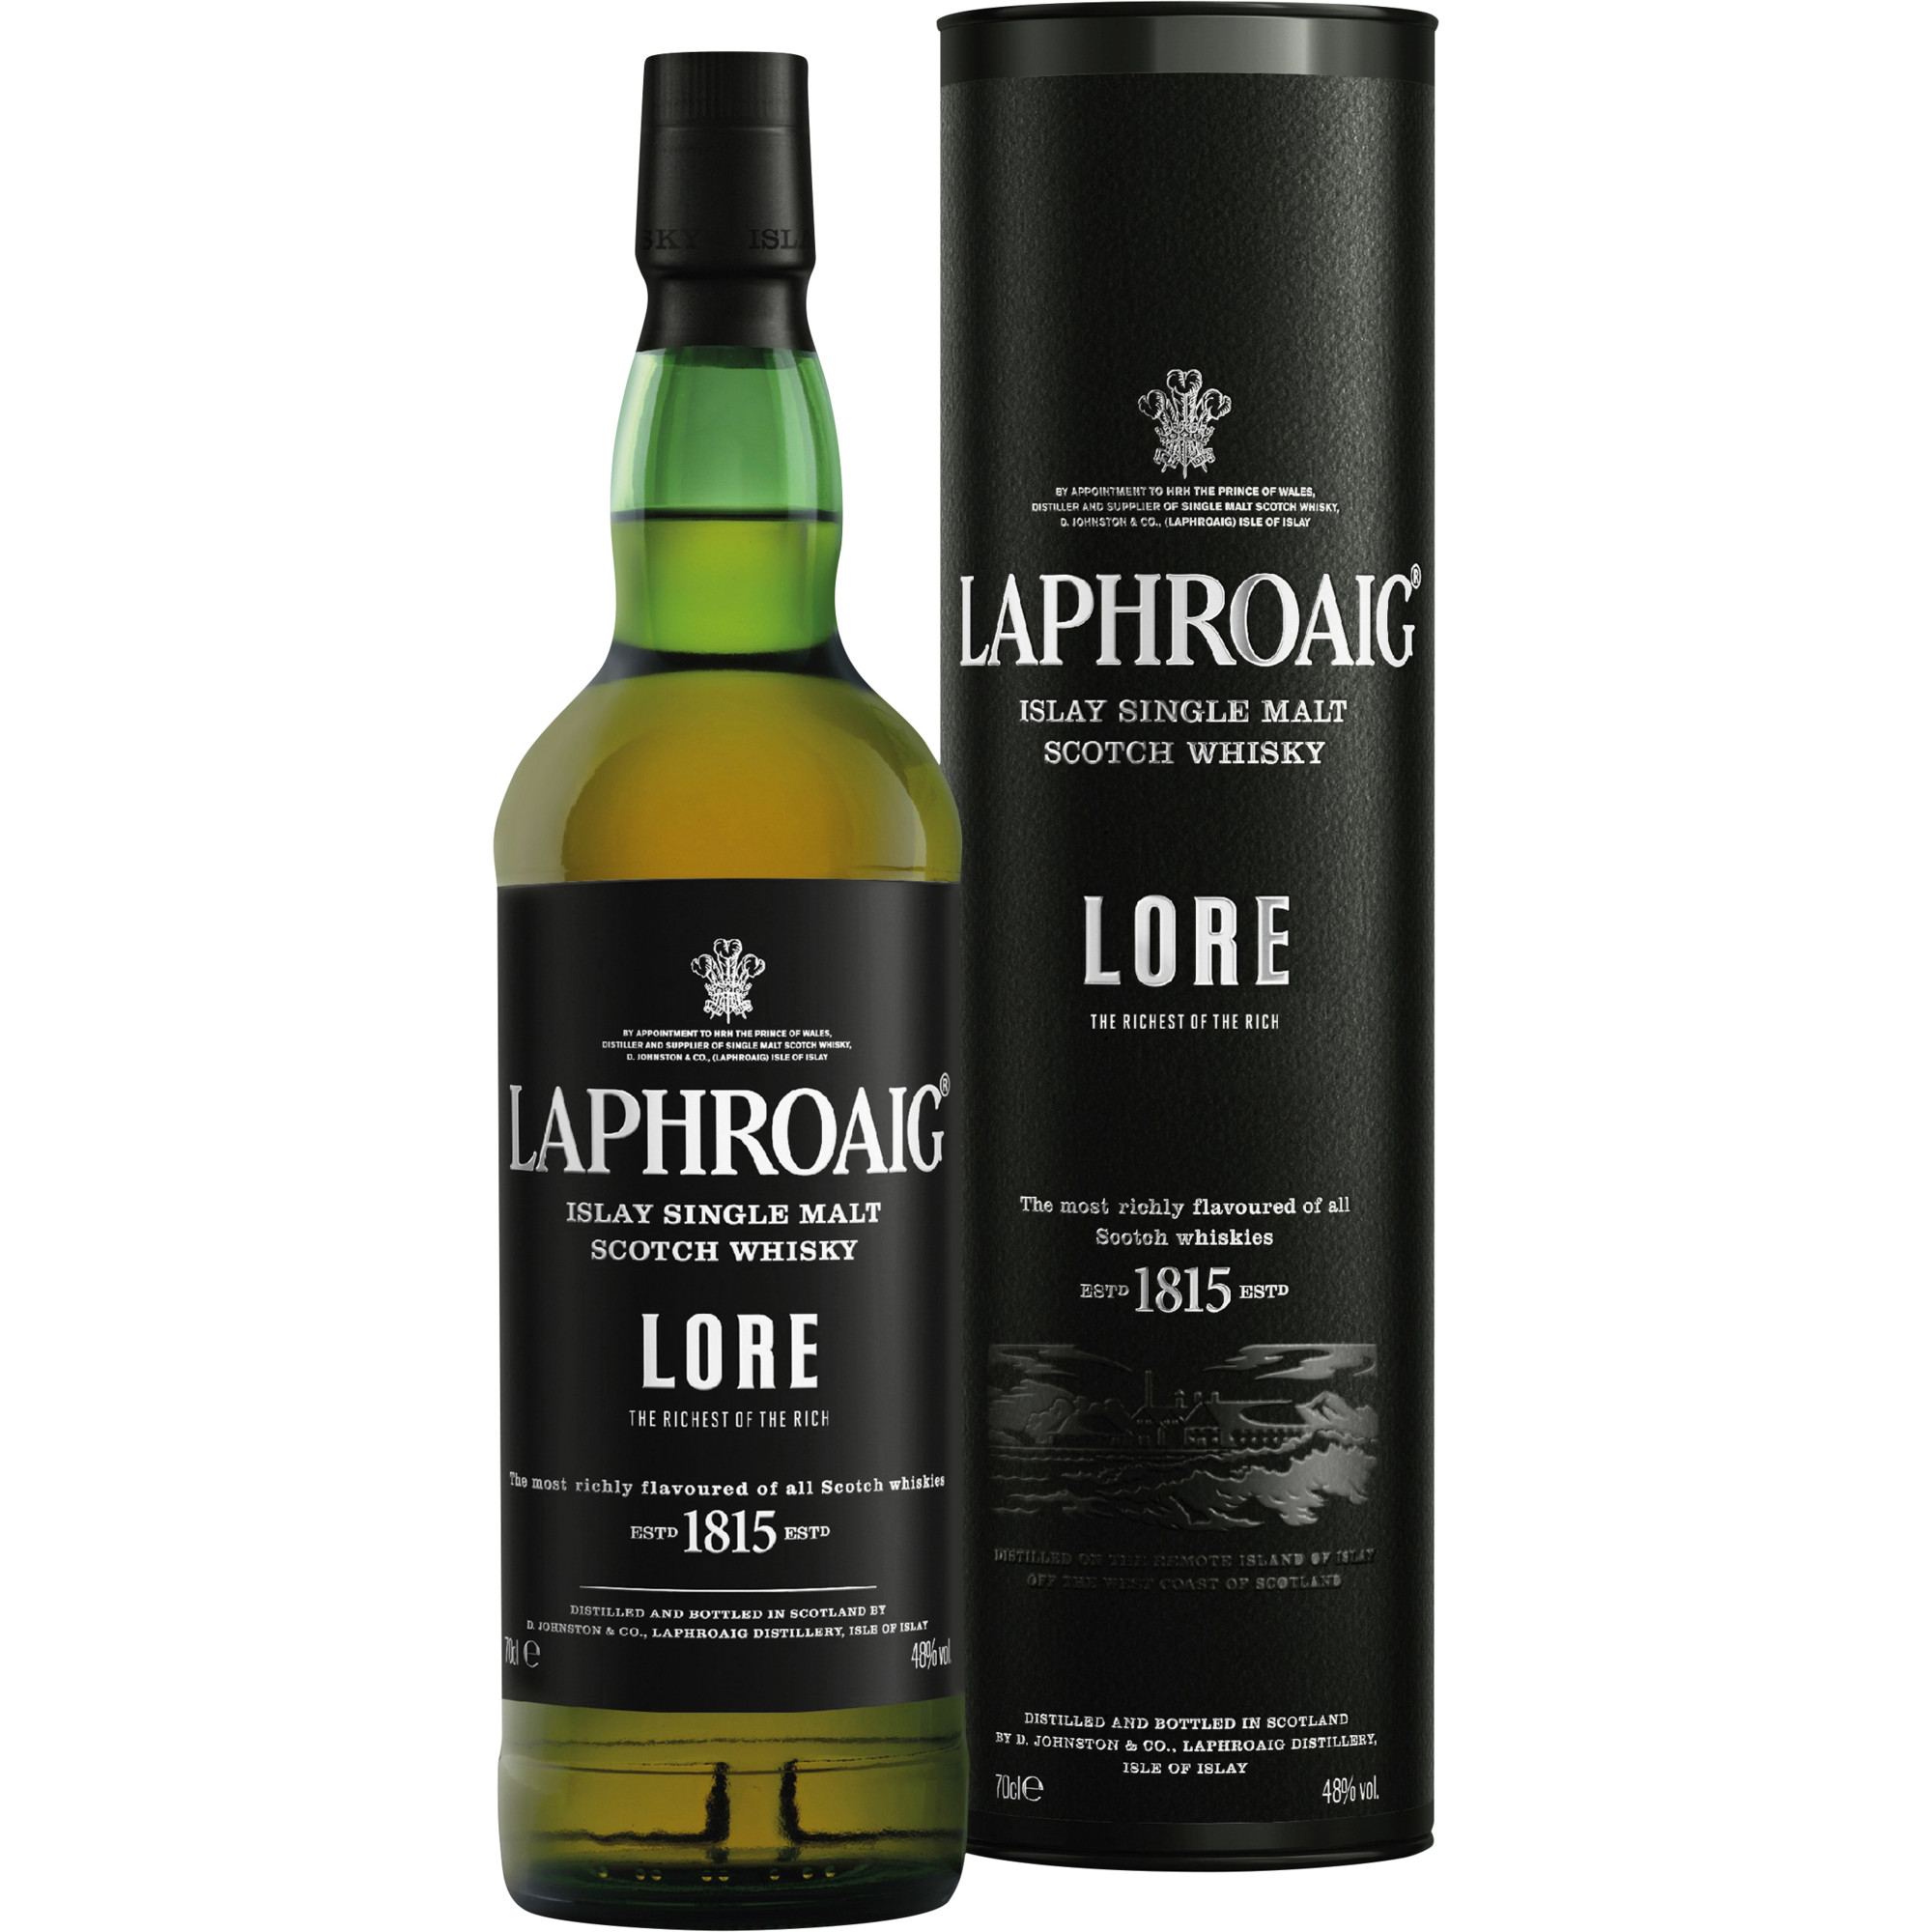 Laphroaig Lore Islay Single Malt Scotch Whisky, 0,7 L, 48% Vol., Schottland, Spirituosen  Spirituosen Hawesko